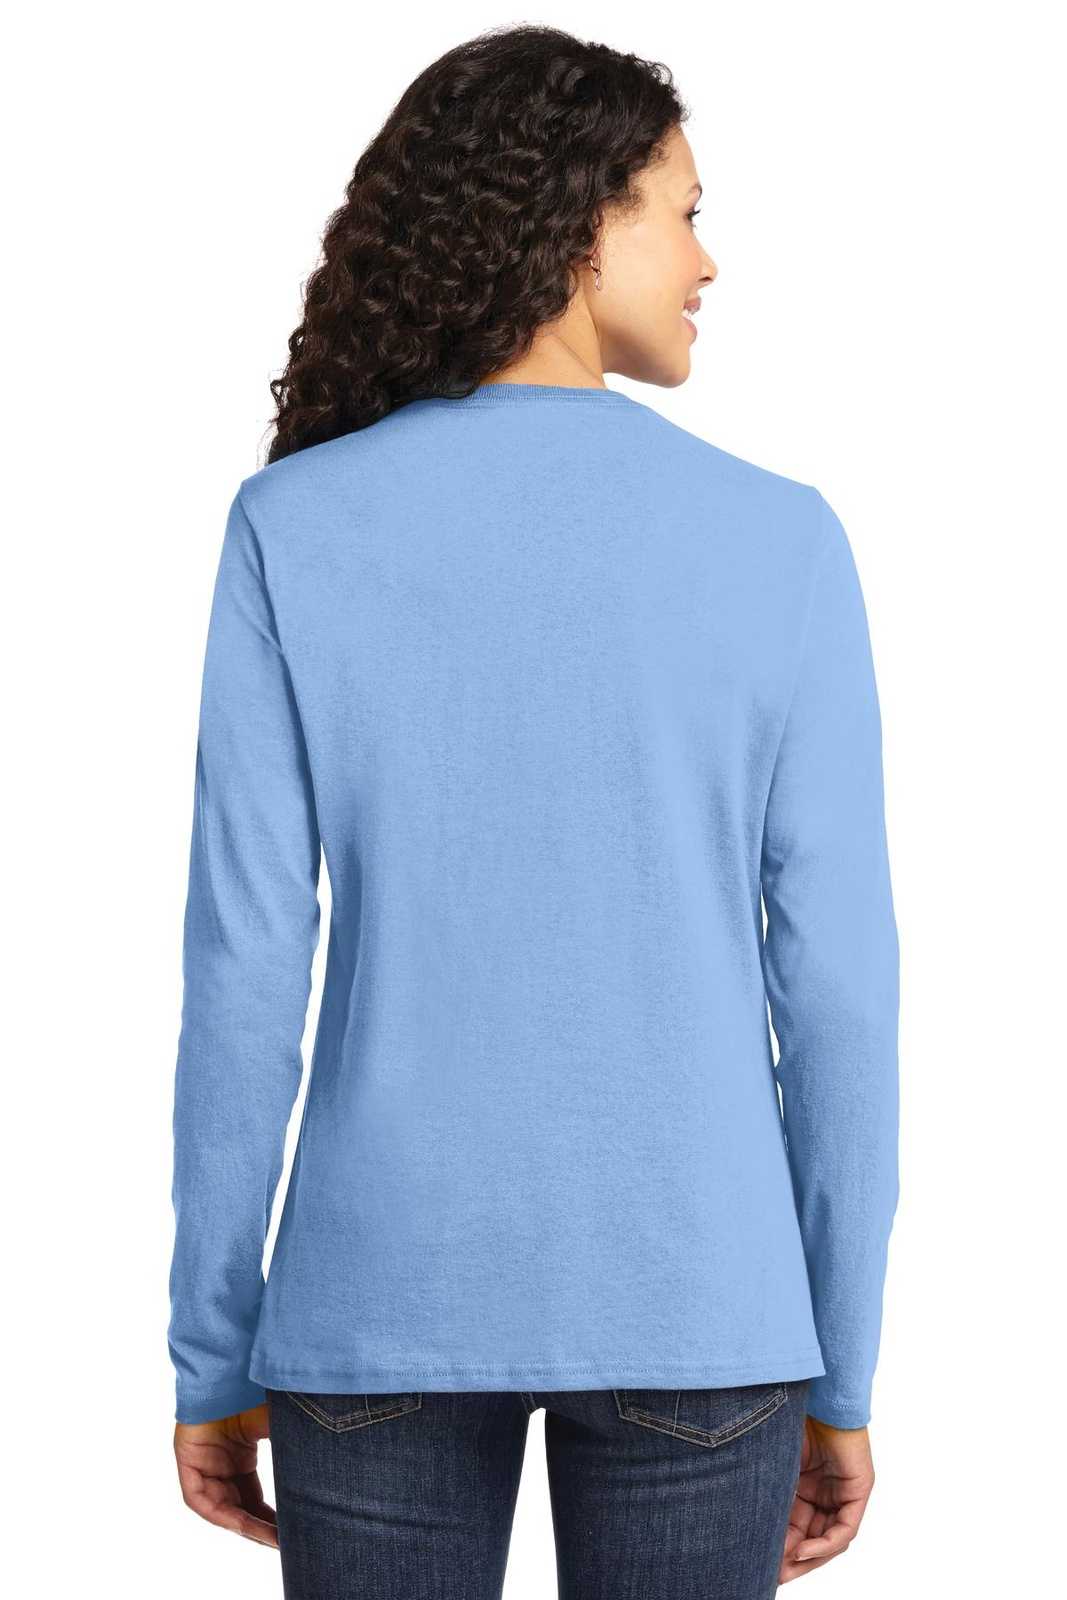 Port & Company LPC54LS Ladies Long Sleeve Core Cotton Tee - Light Blue - HIT a Double - 1